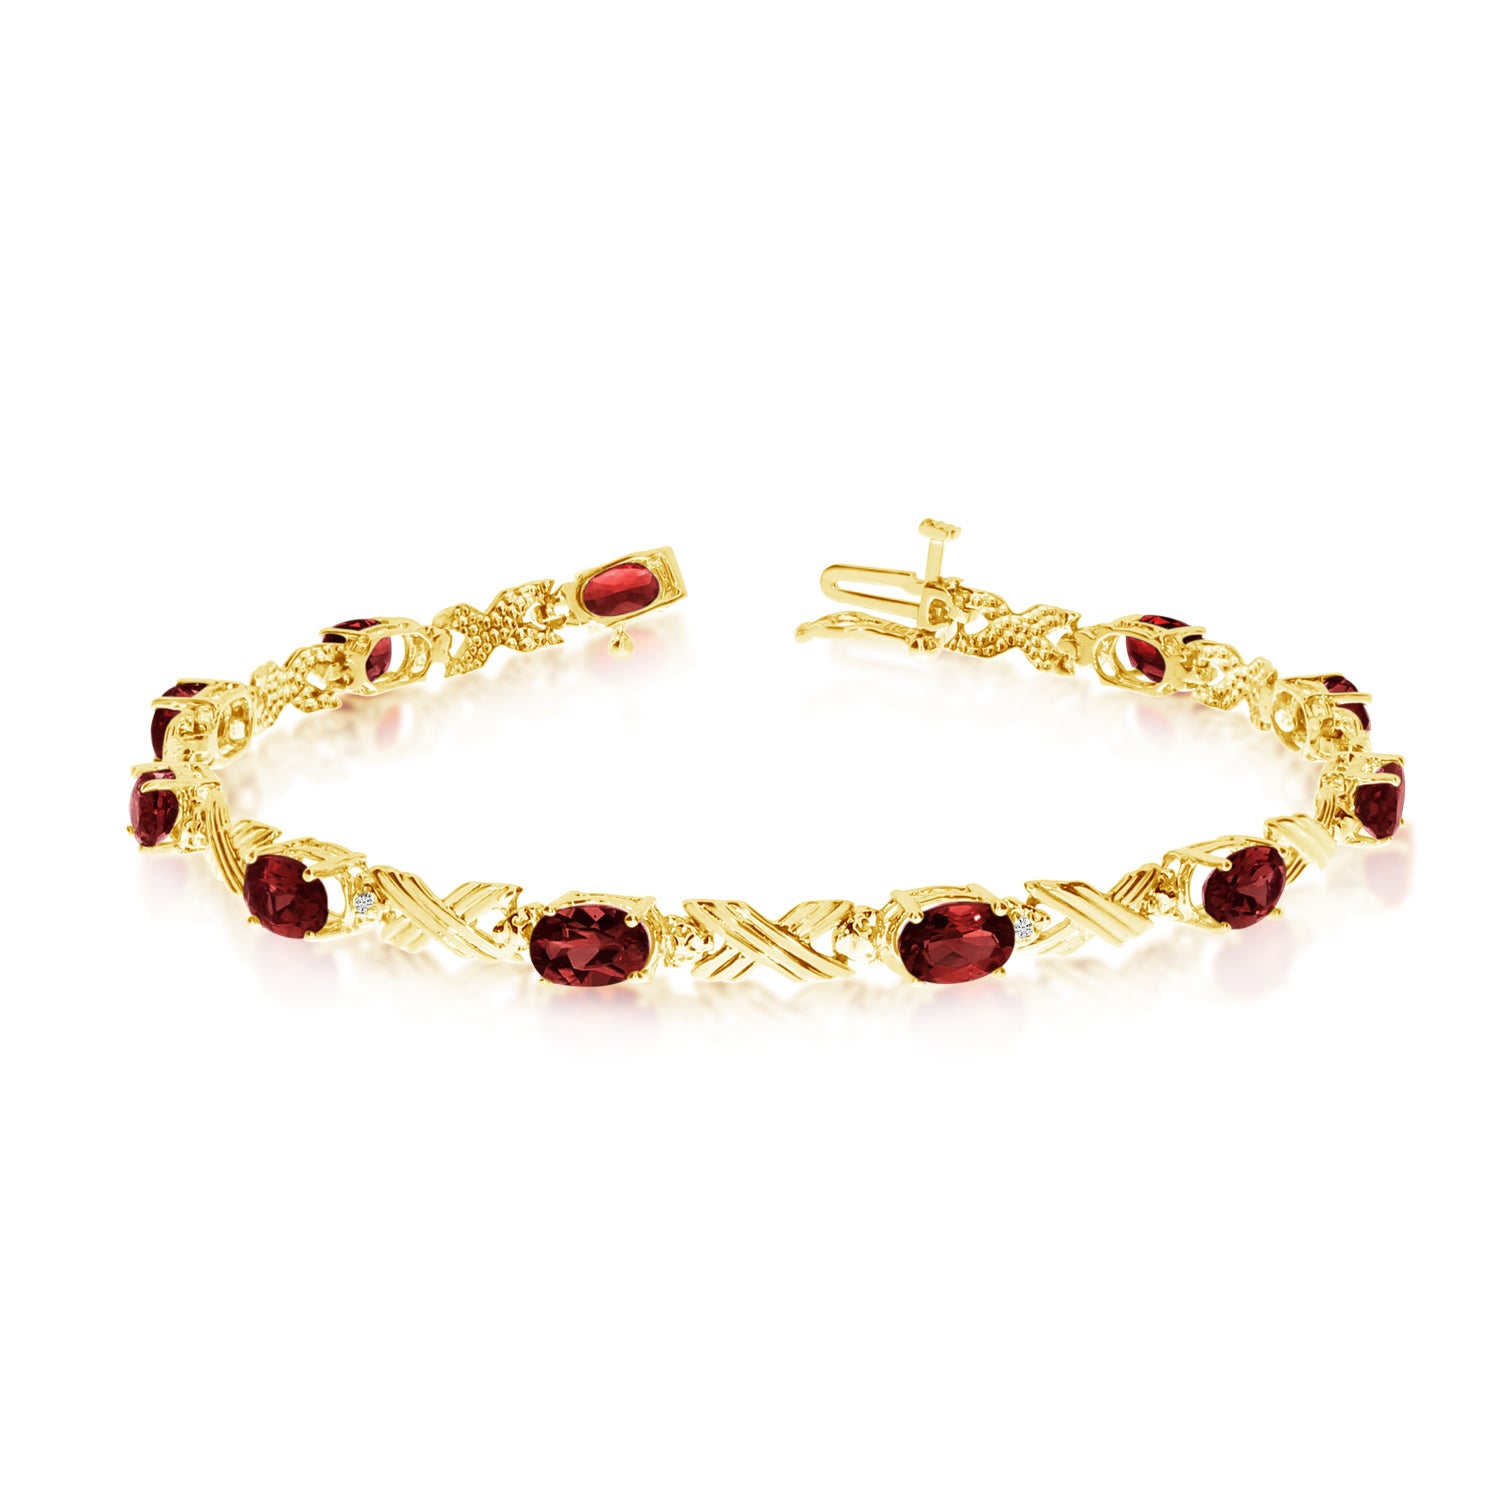 10K Yellow Gold Oval Garnet Stones And Diamonds Tennis Bracelet, 7" fine designer jewelry for men and women